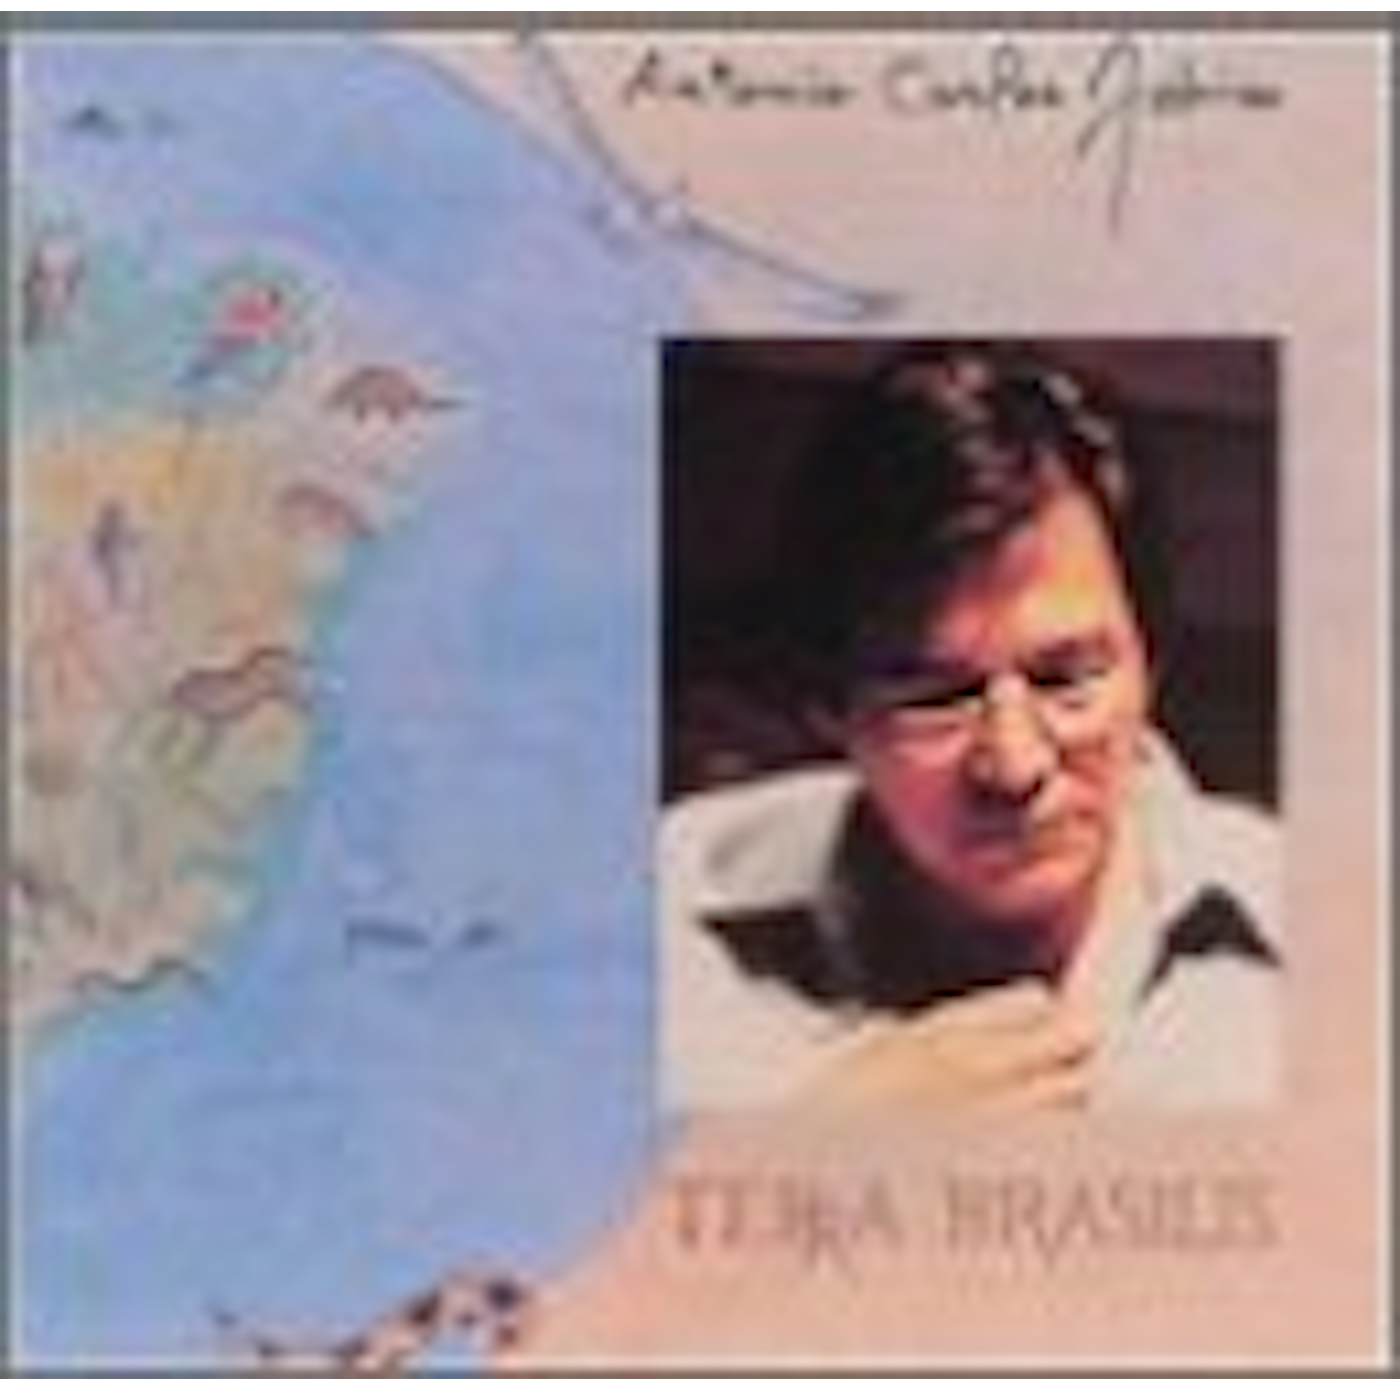 Antônio Carlos Jobim TERRA BRASILIS CD